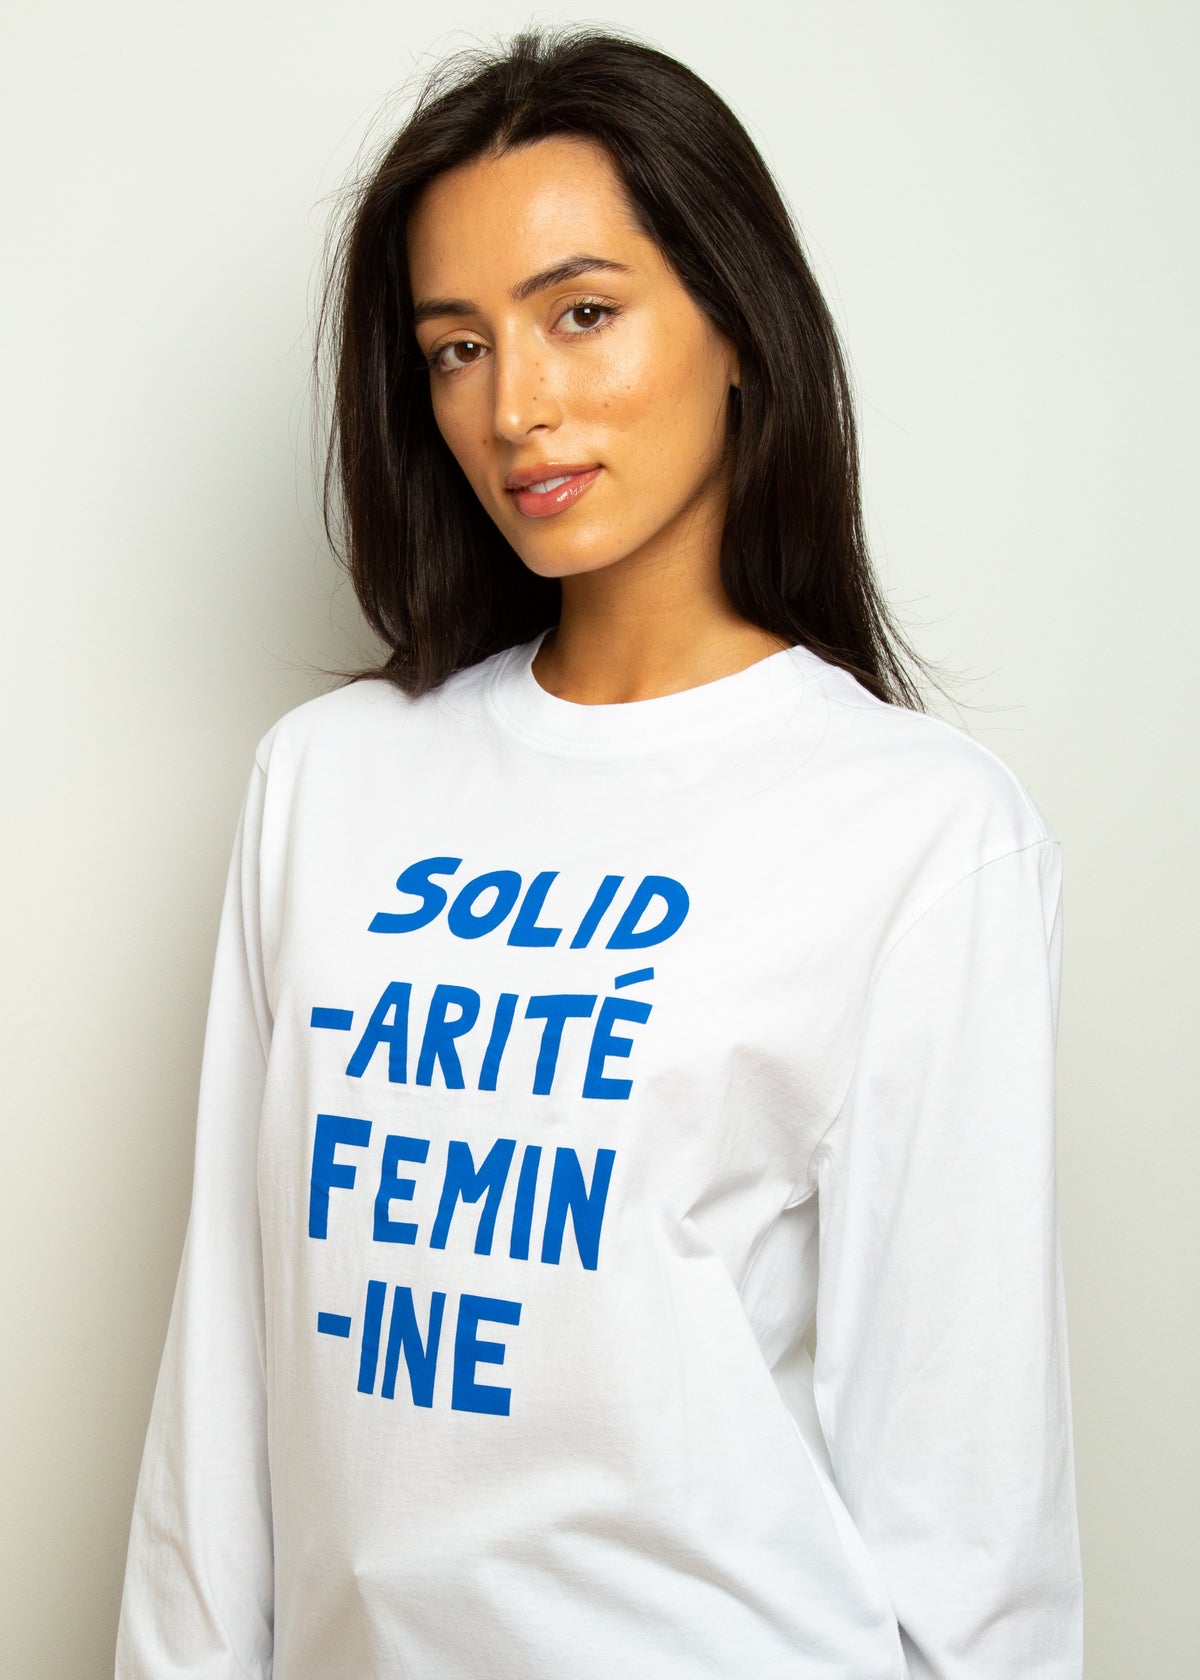 BF Solidaritie Feminine Top in White, Navy